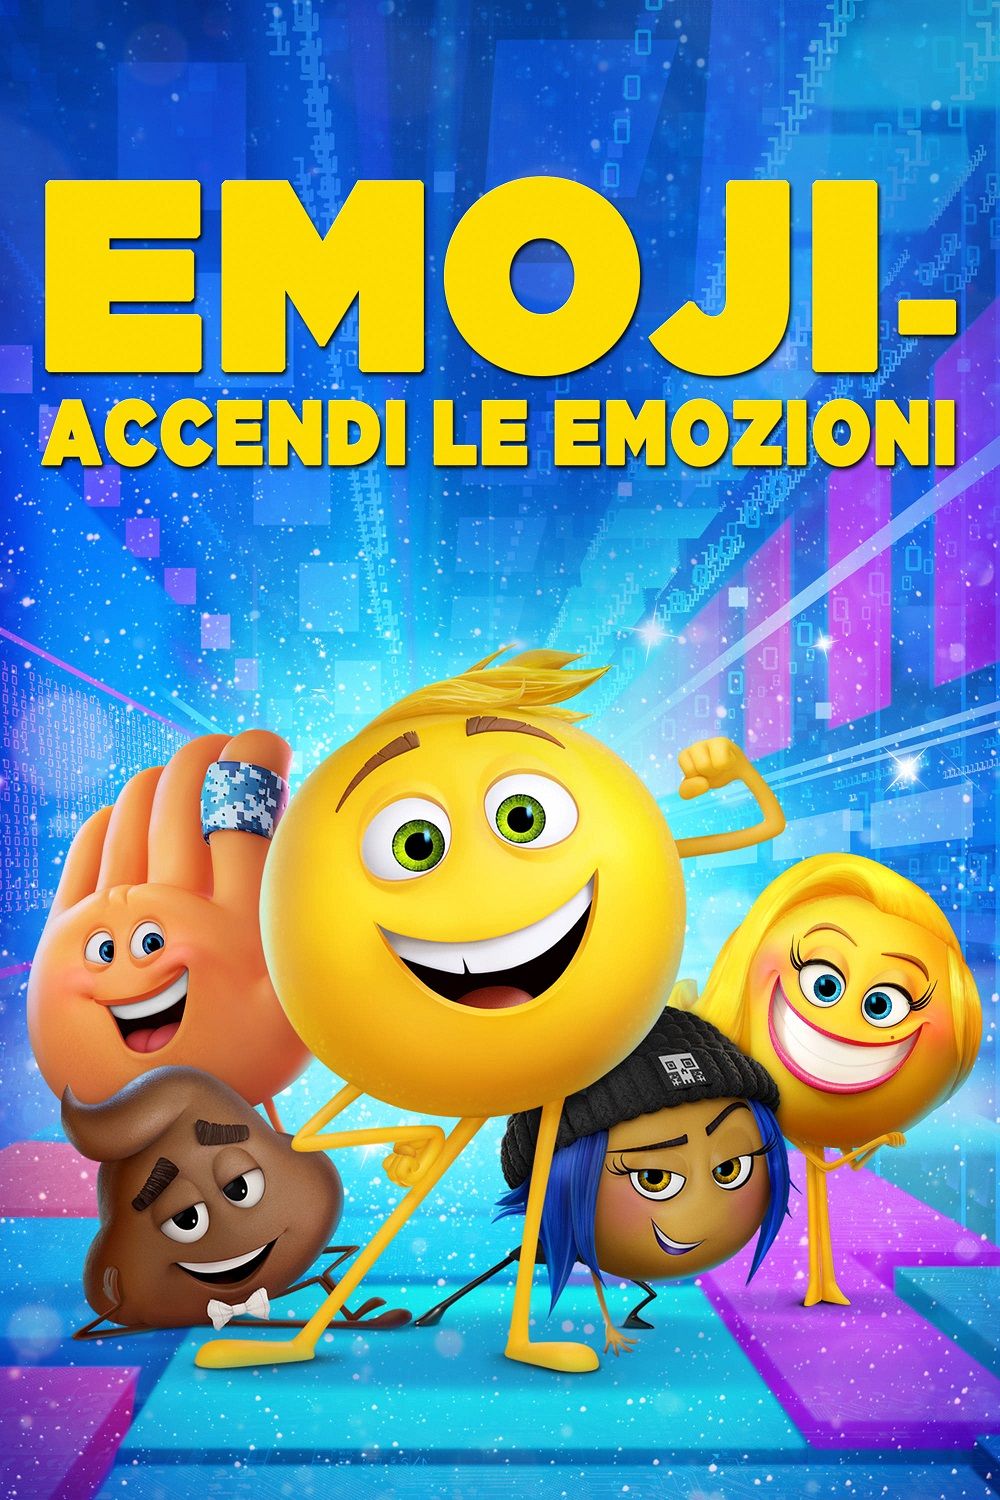 Copertina Film Emoji: Accendi le Emozioni Streaming FULL HD 